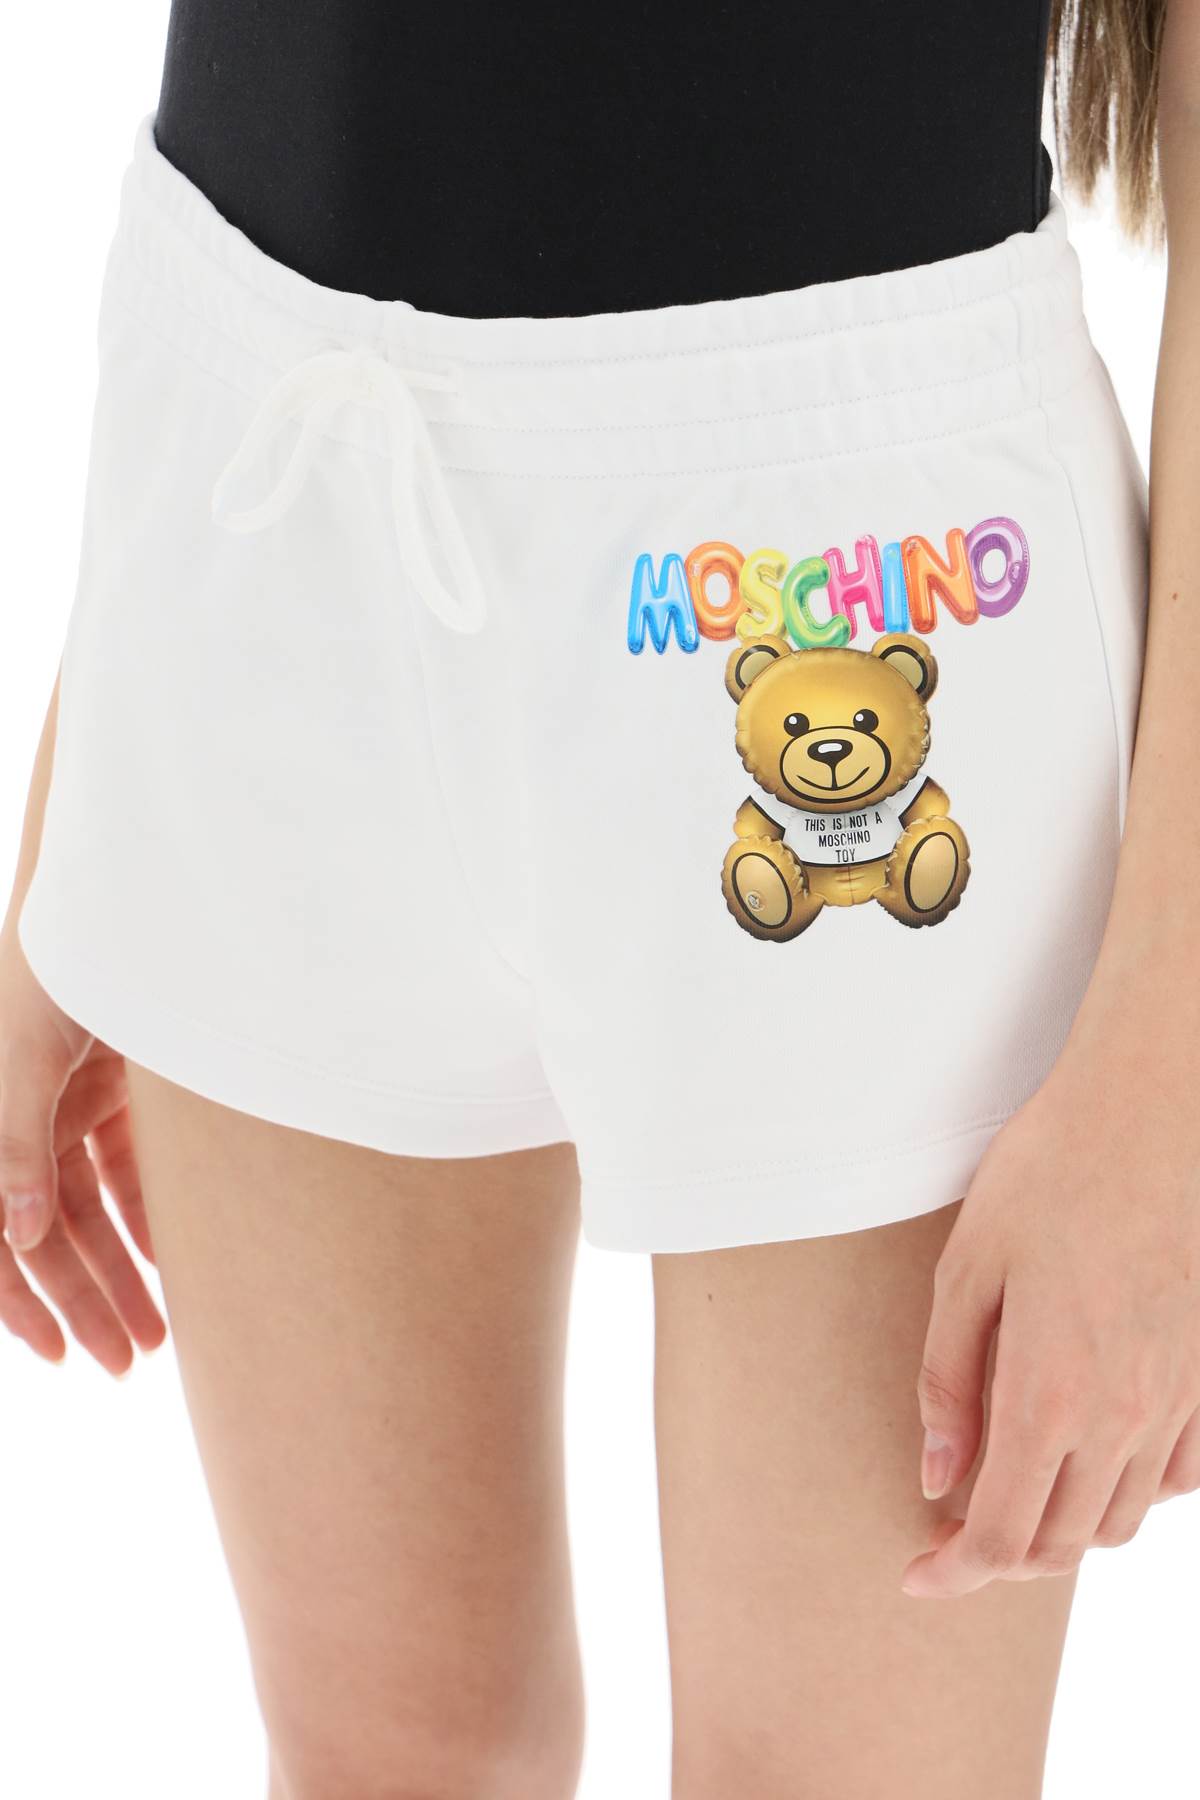 Moschino logo printed shorts-3